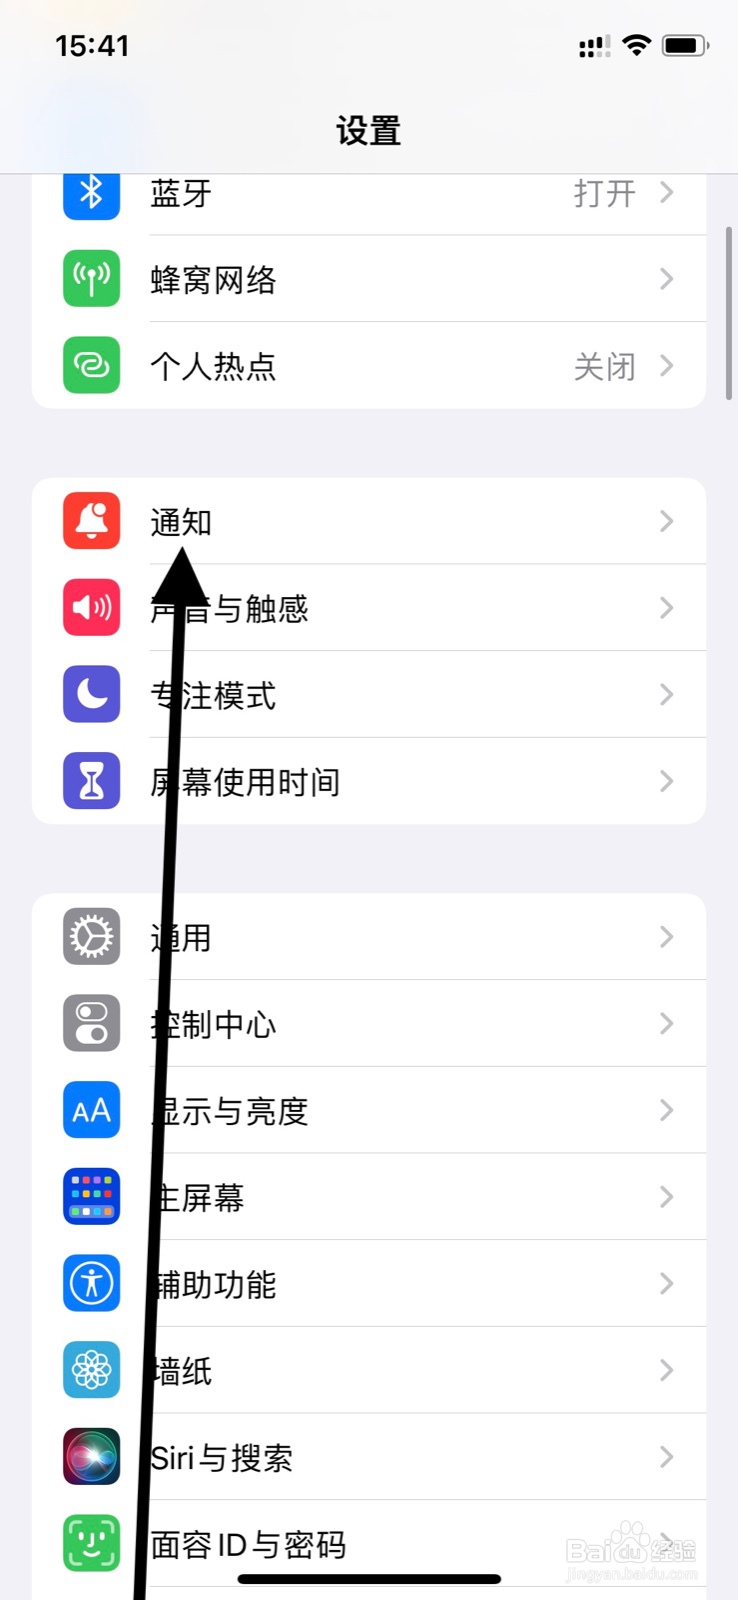 <b>iPhone横幅允许“欢乐斗地主”app显示通知</b>